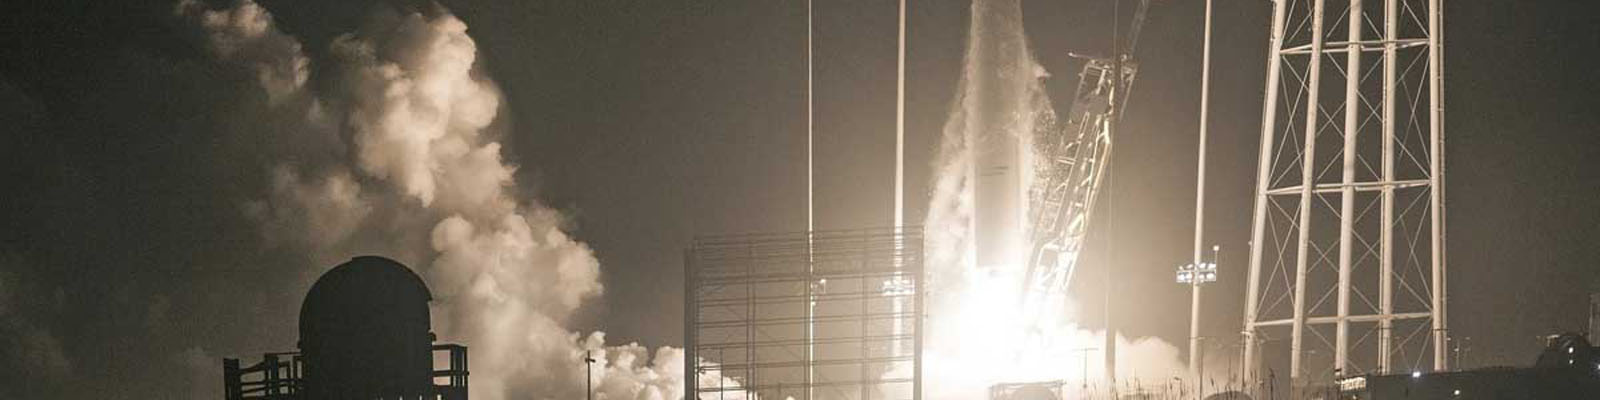 lancement cygnus crs-9